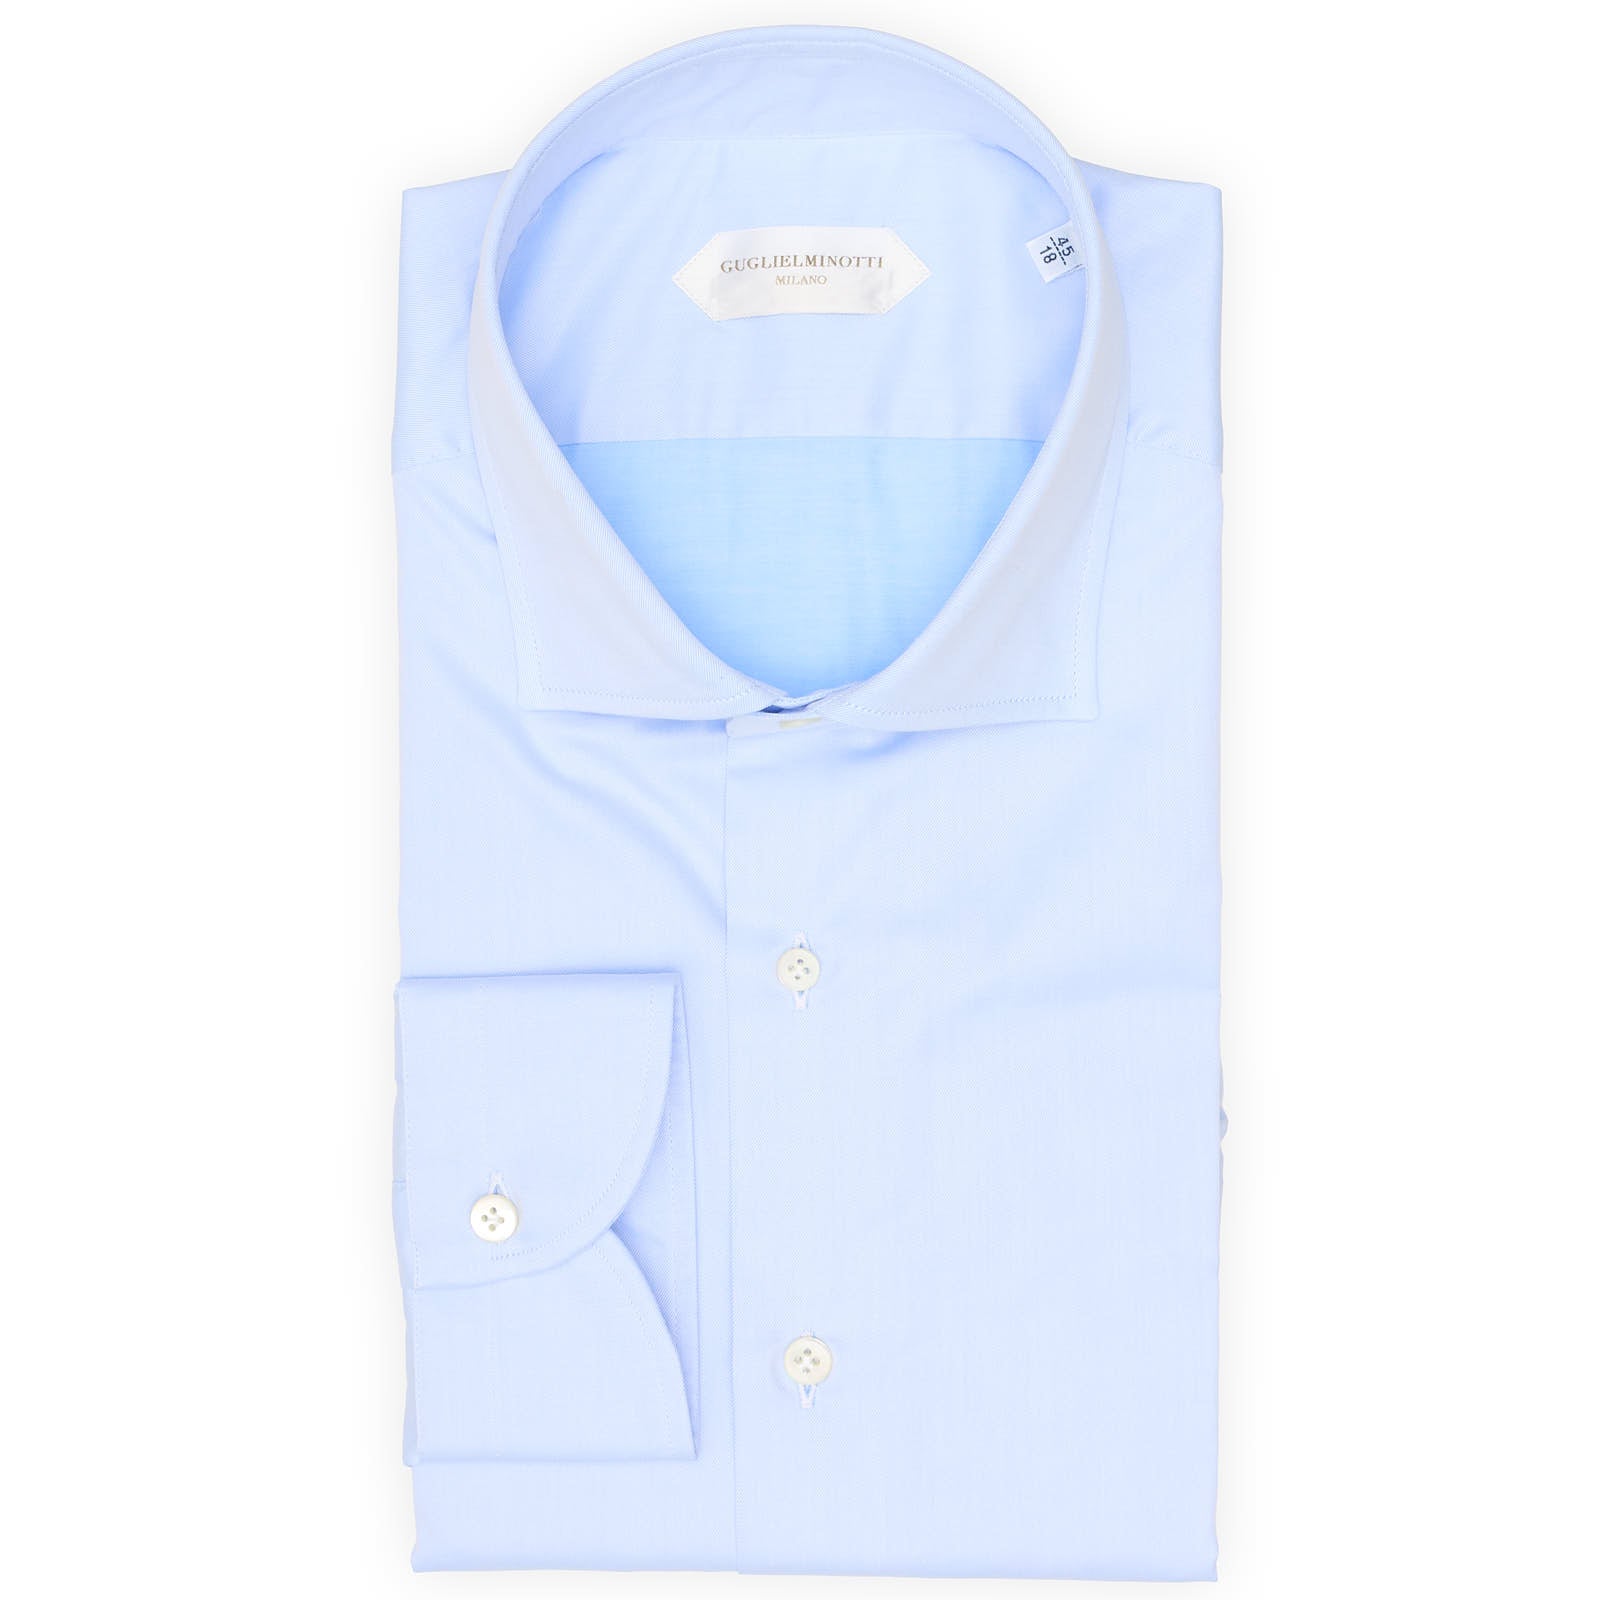 GUGLIELMINOTTI Milano Blue Twill Cotton Dress Shirt EU 45 NEW US 18